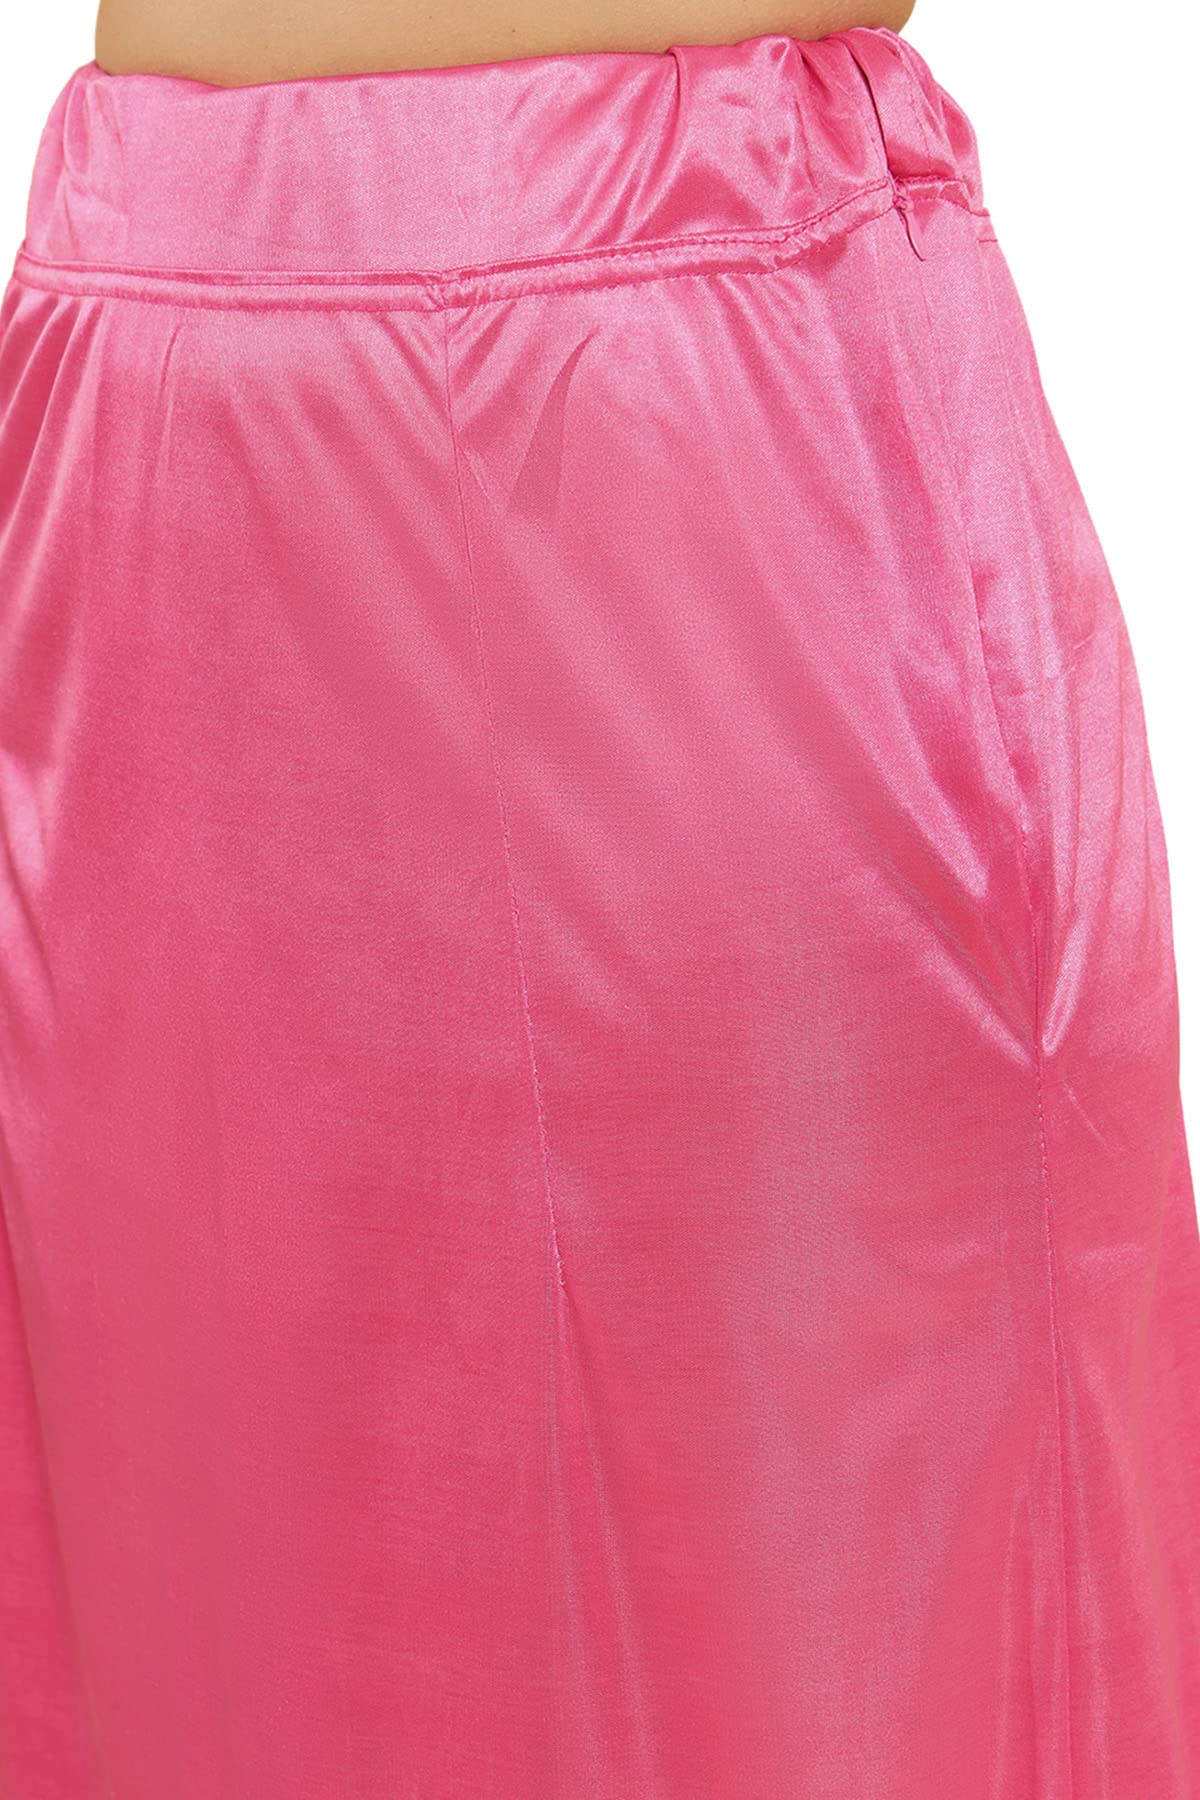 Soch Onion Pink Nylon Petticoat